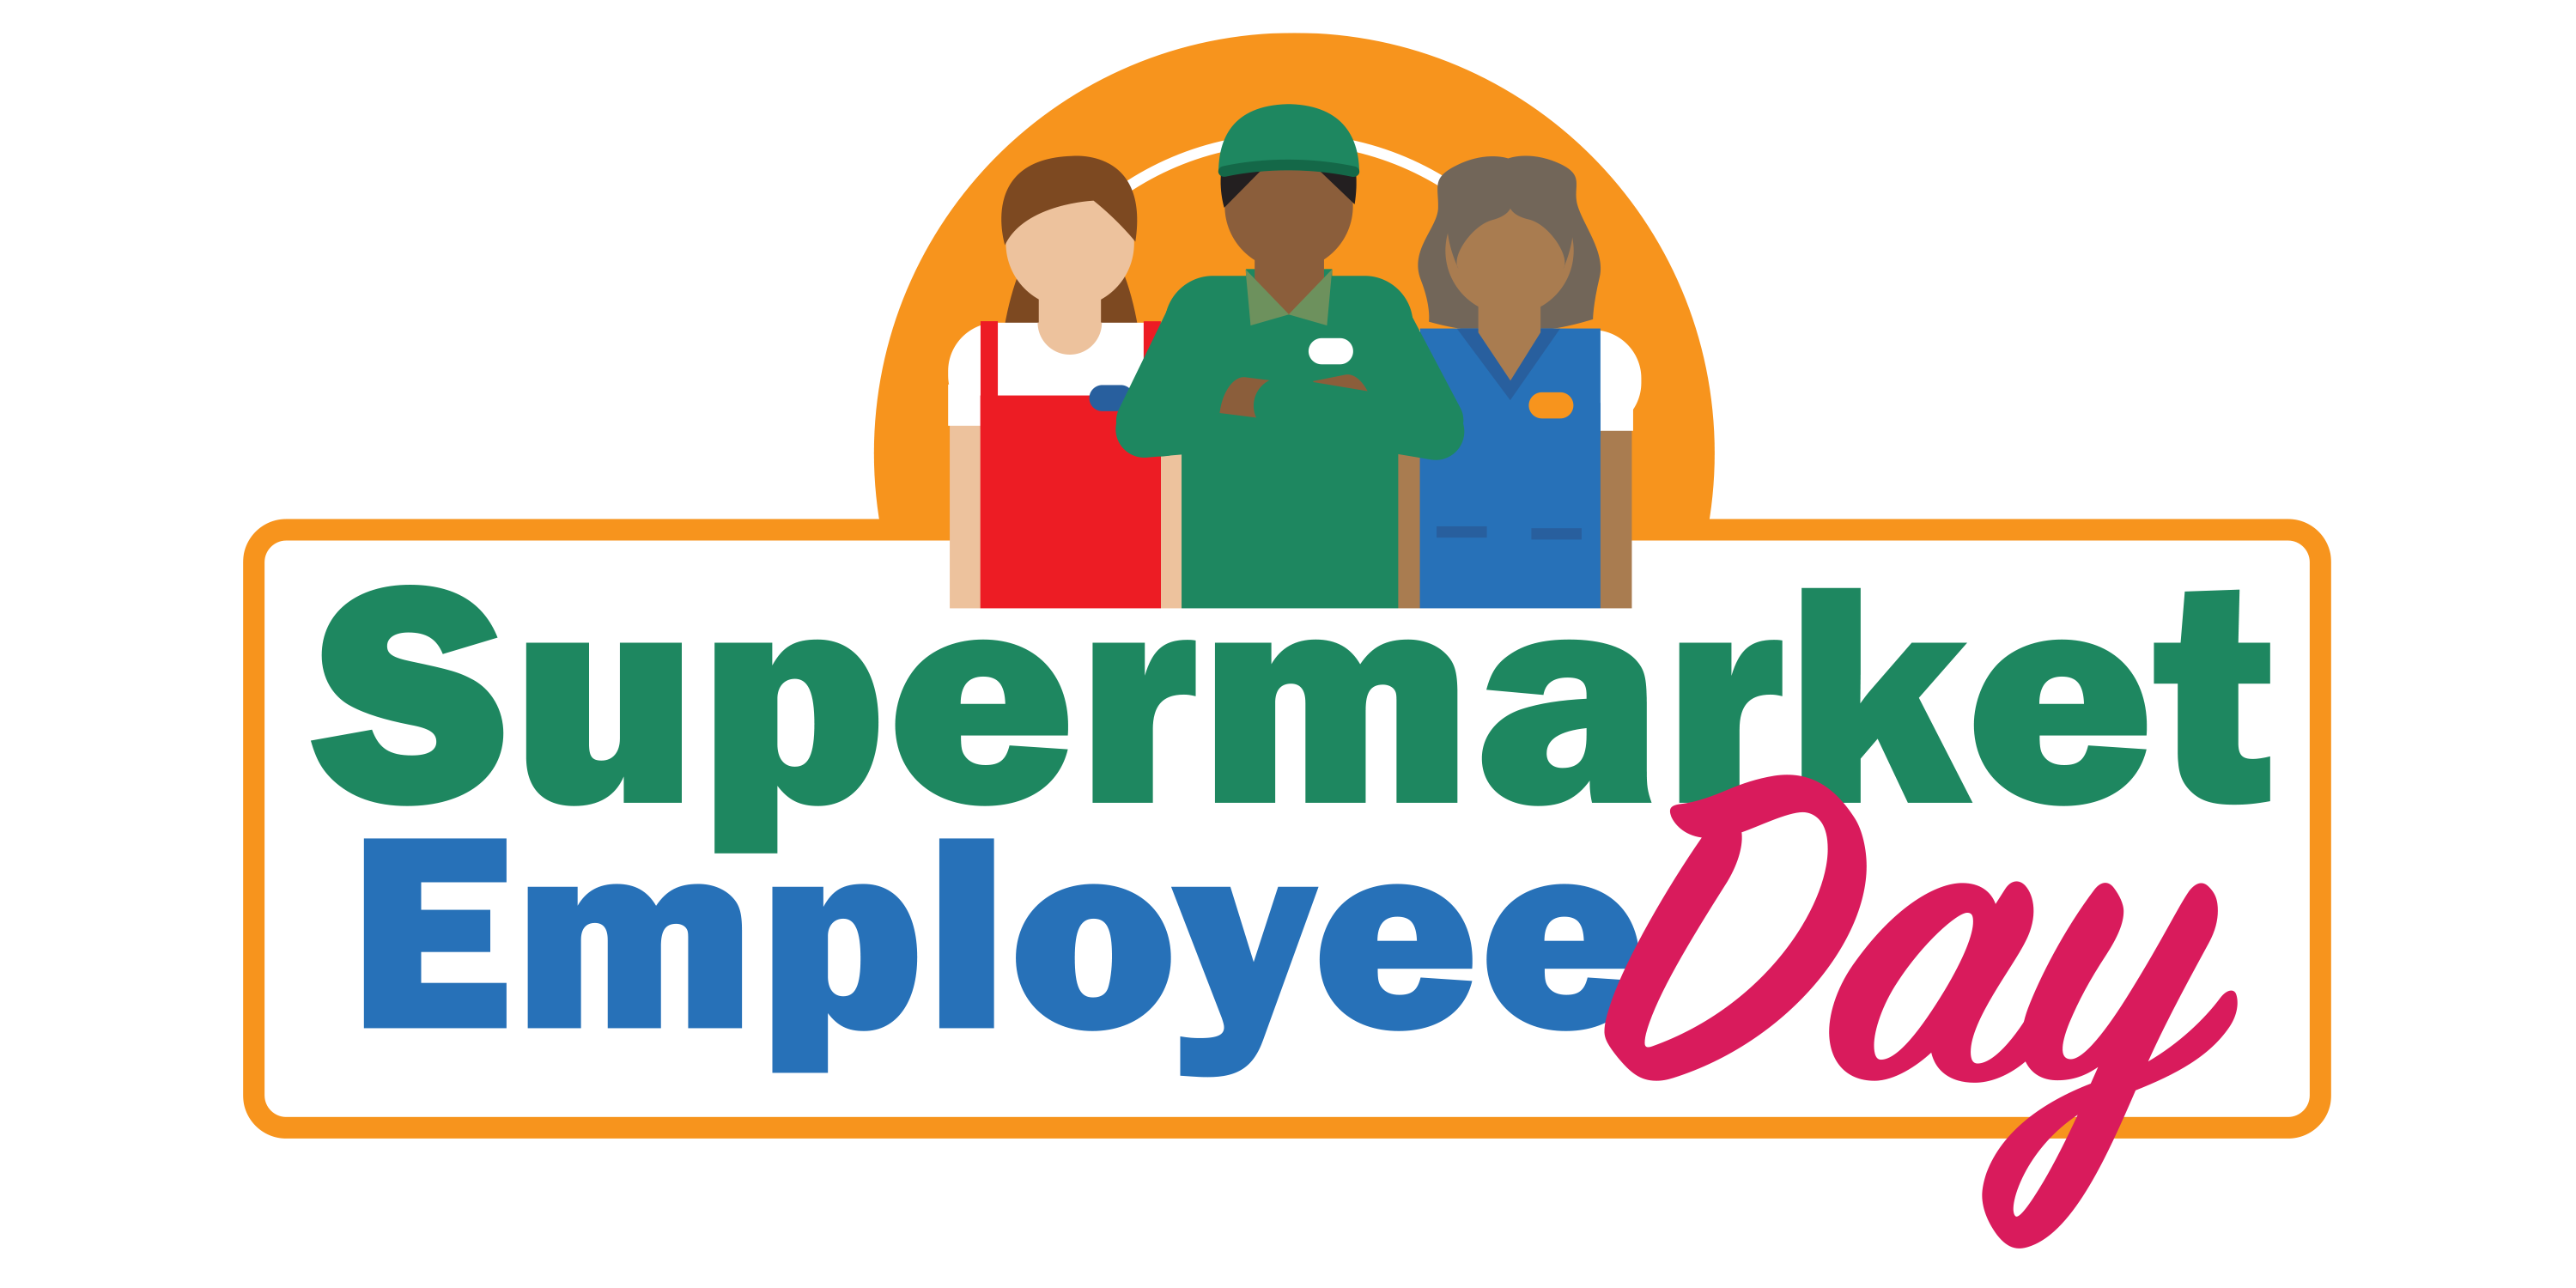 FMI Supermarket Employee Day